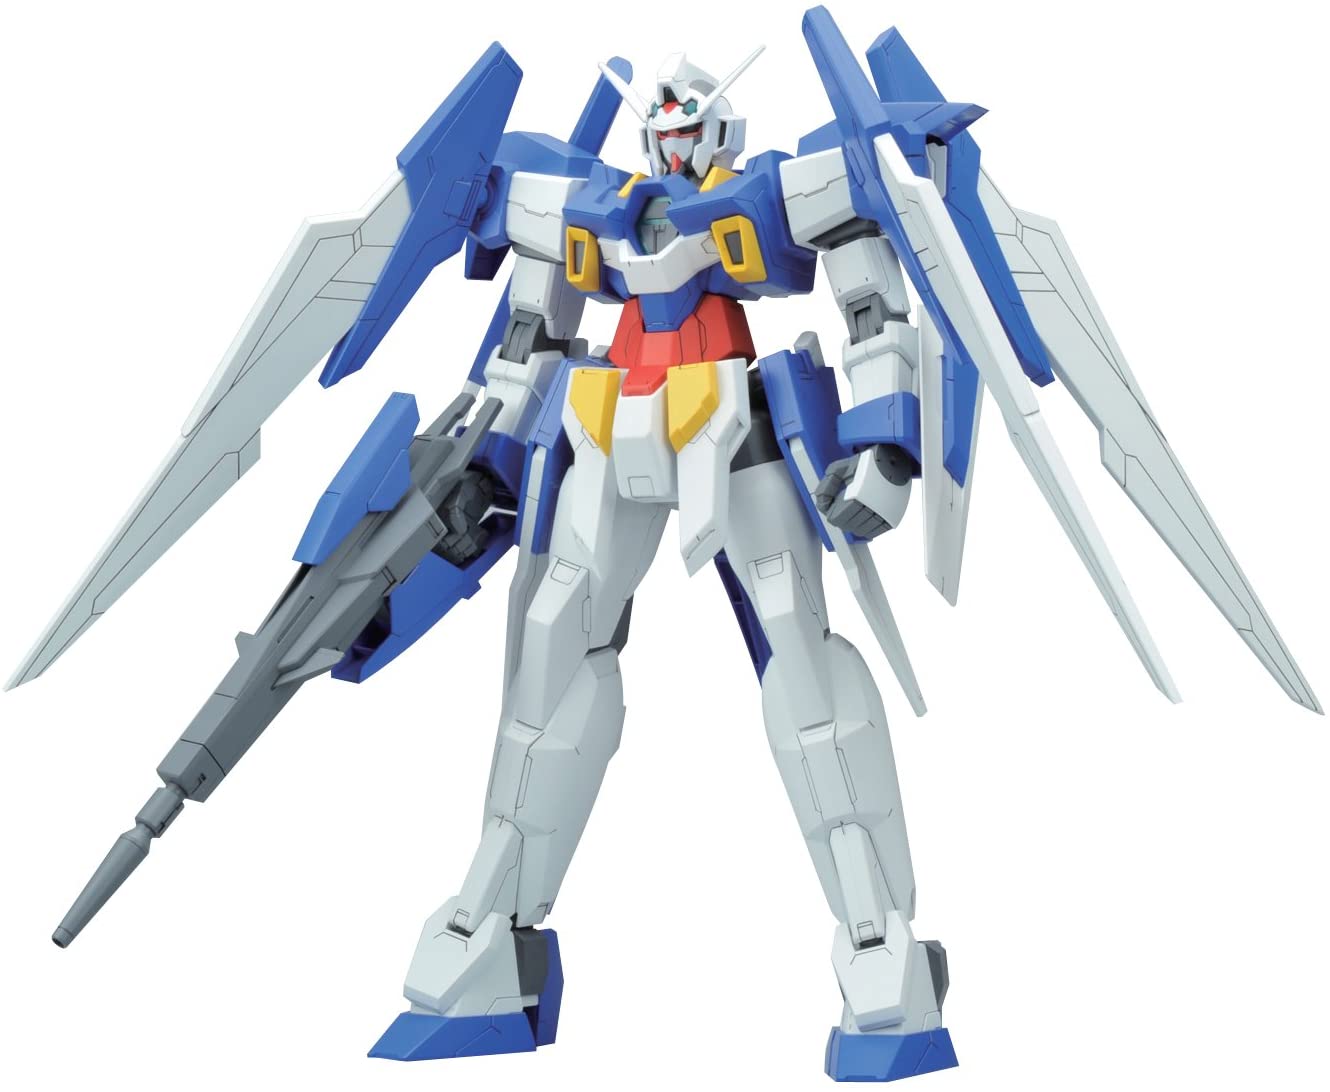 Mega Size - AGE-2 Gundam AGE-2 Normal